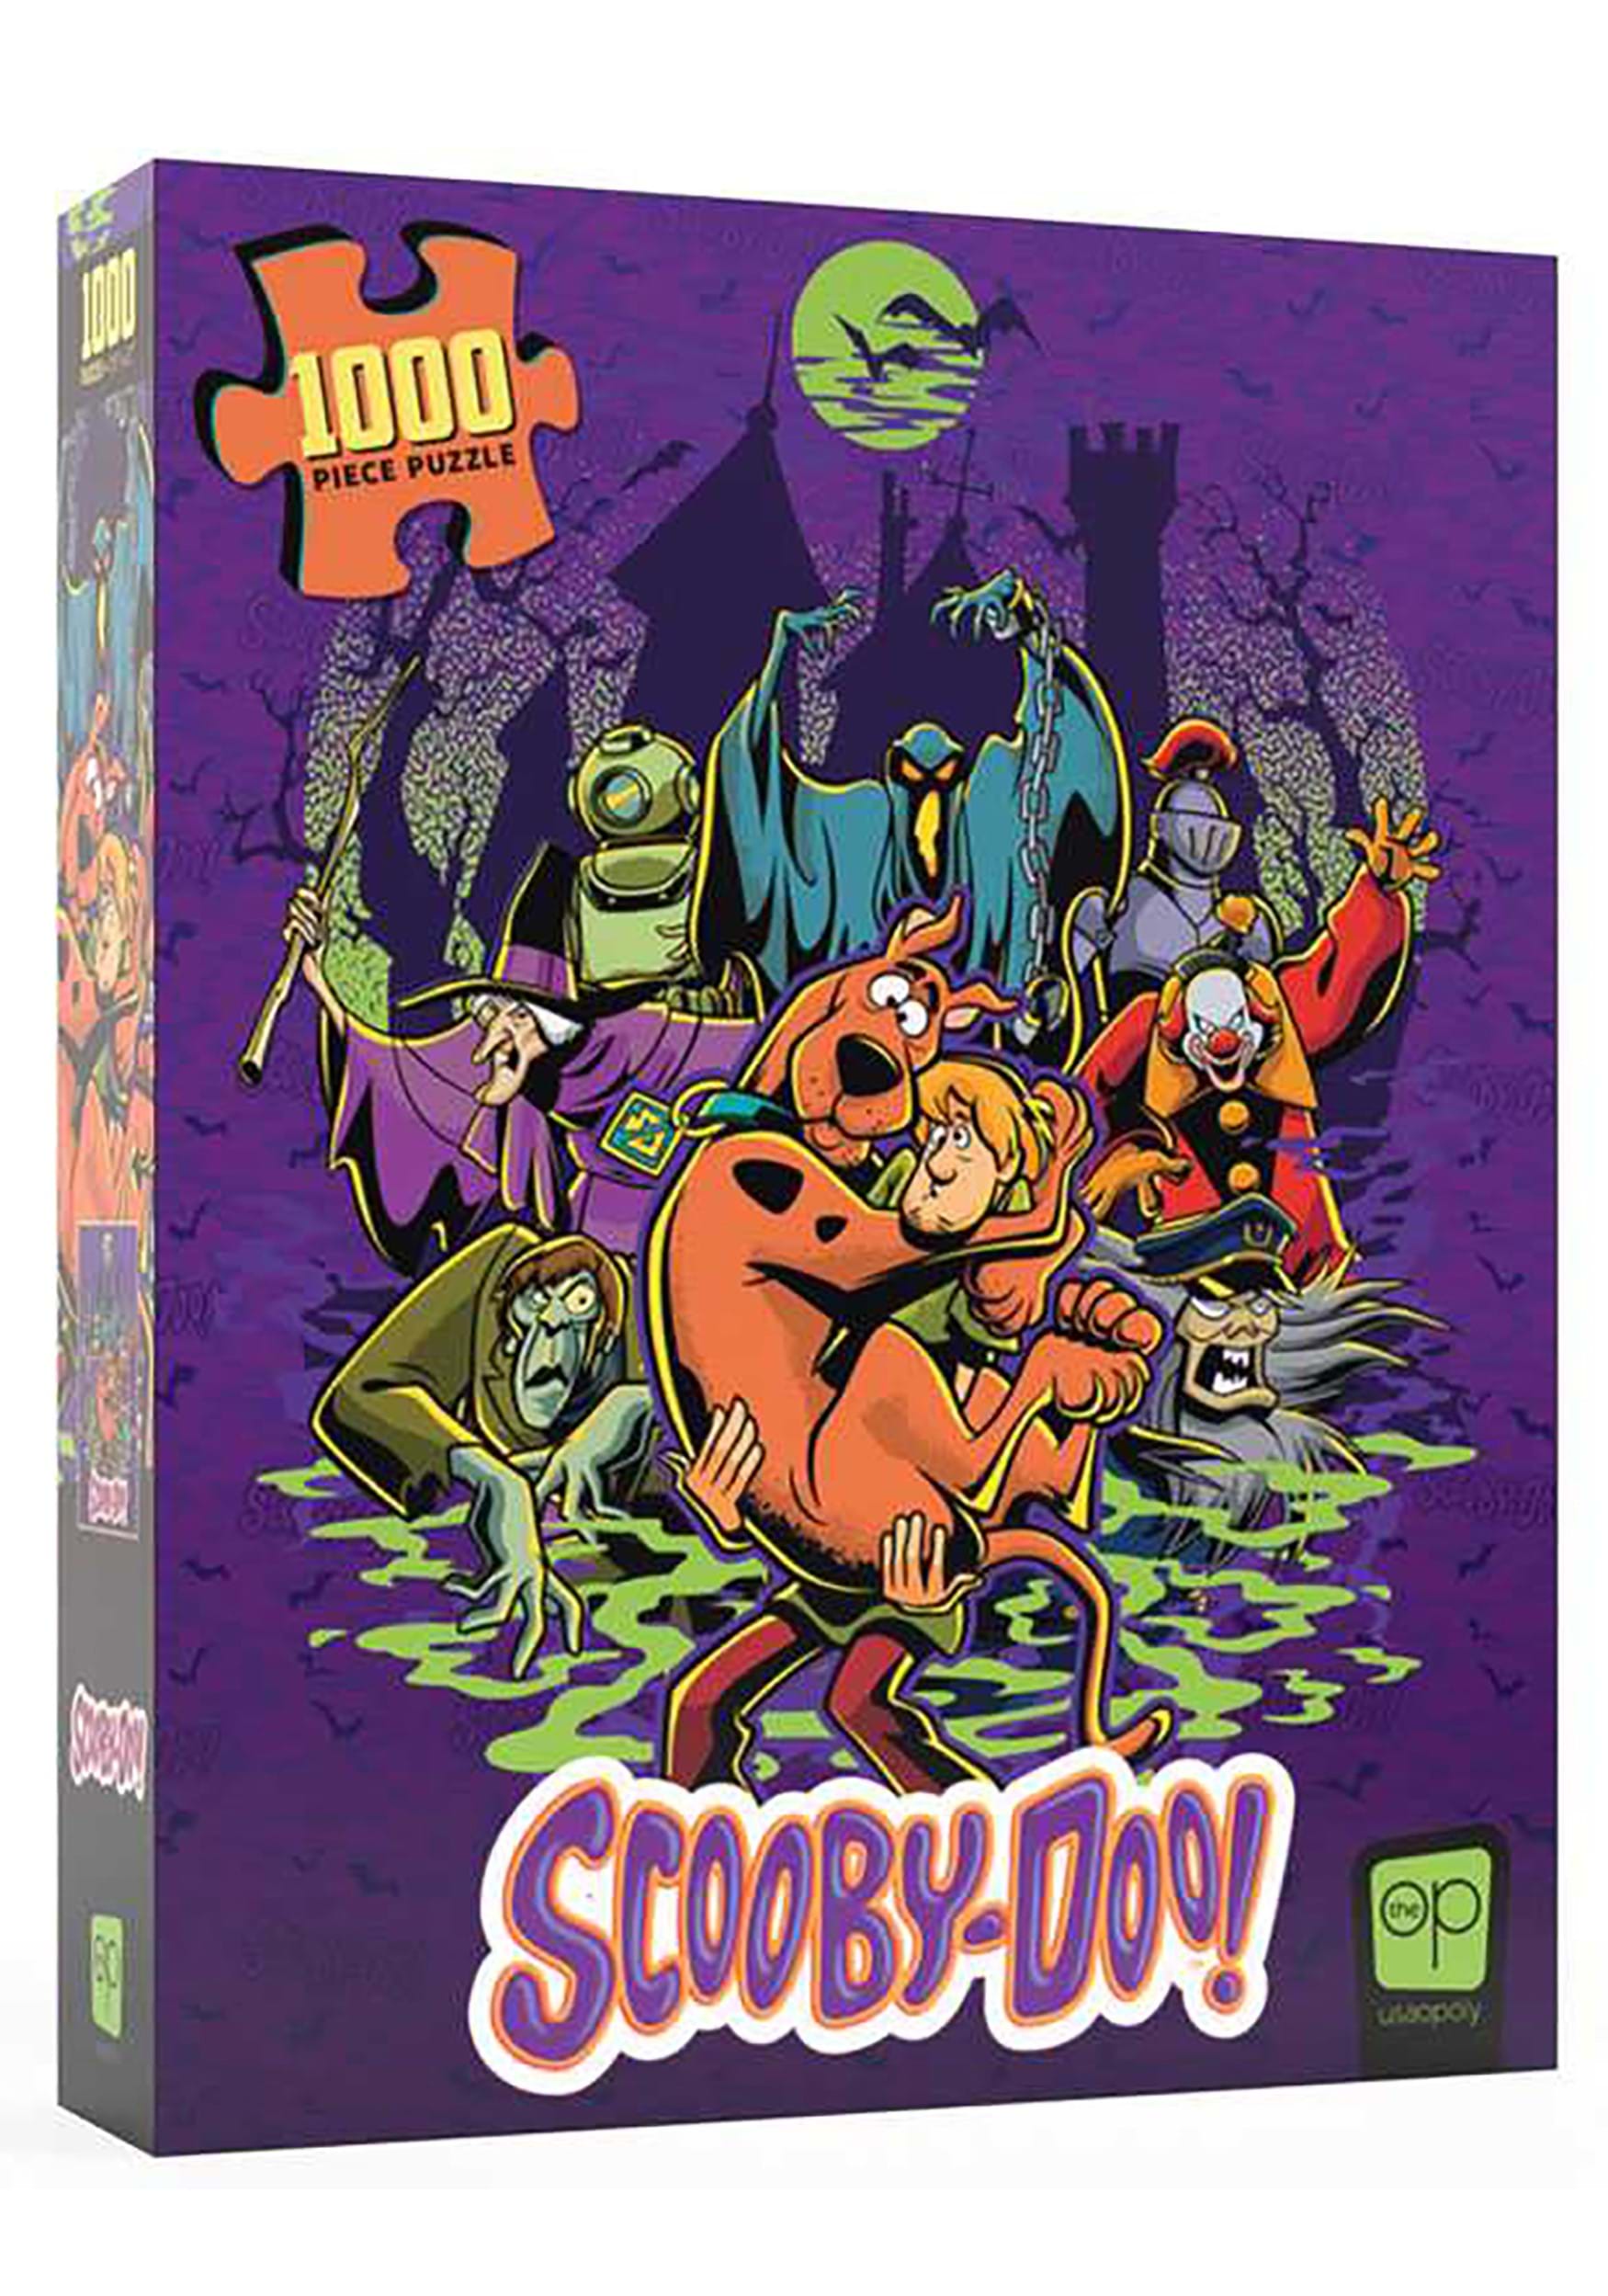 1000 Piece Scooby-Doo “Zoinks!” Puzzle